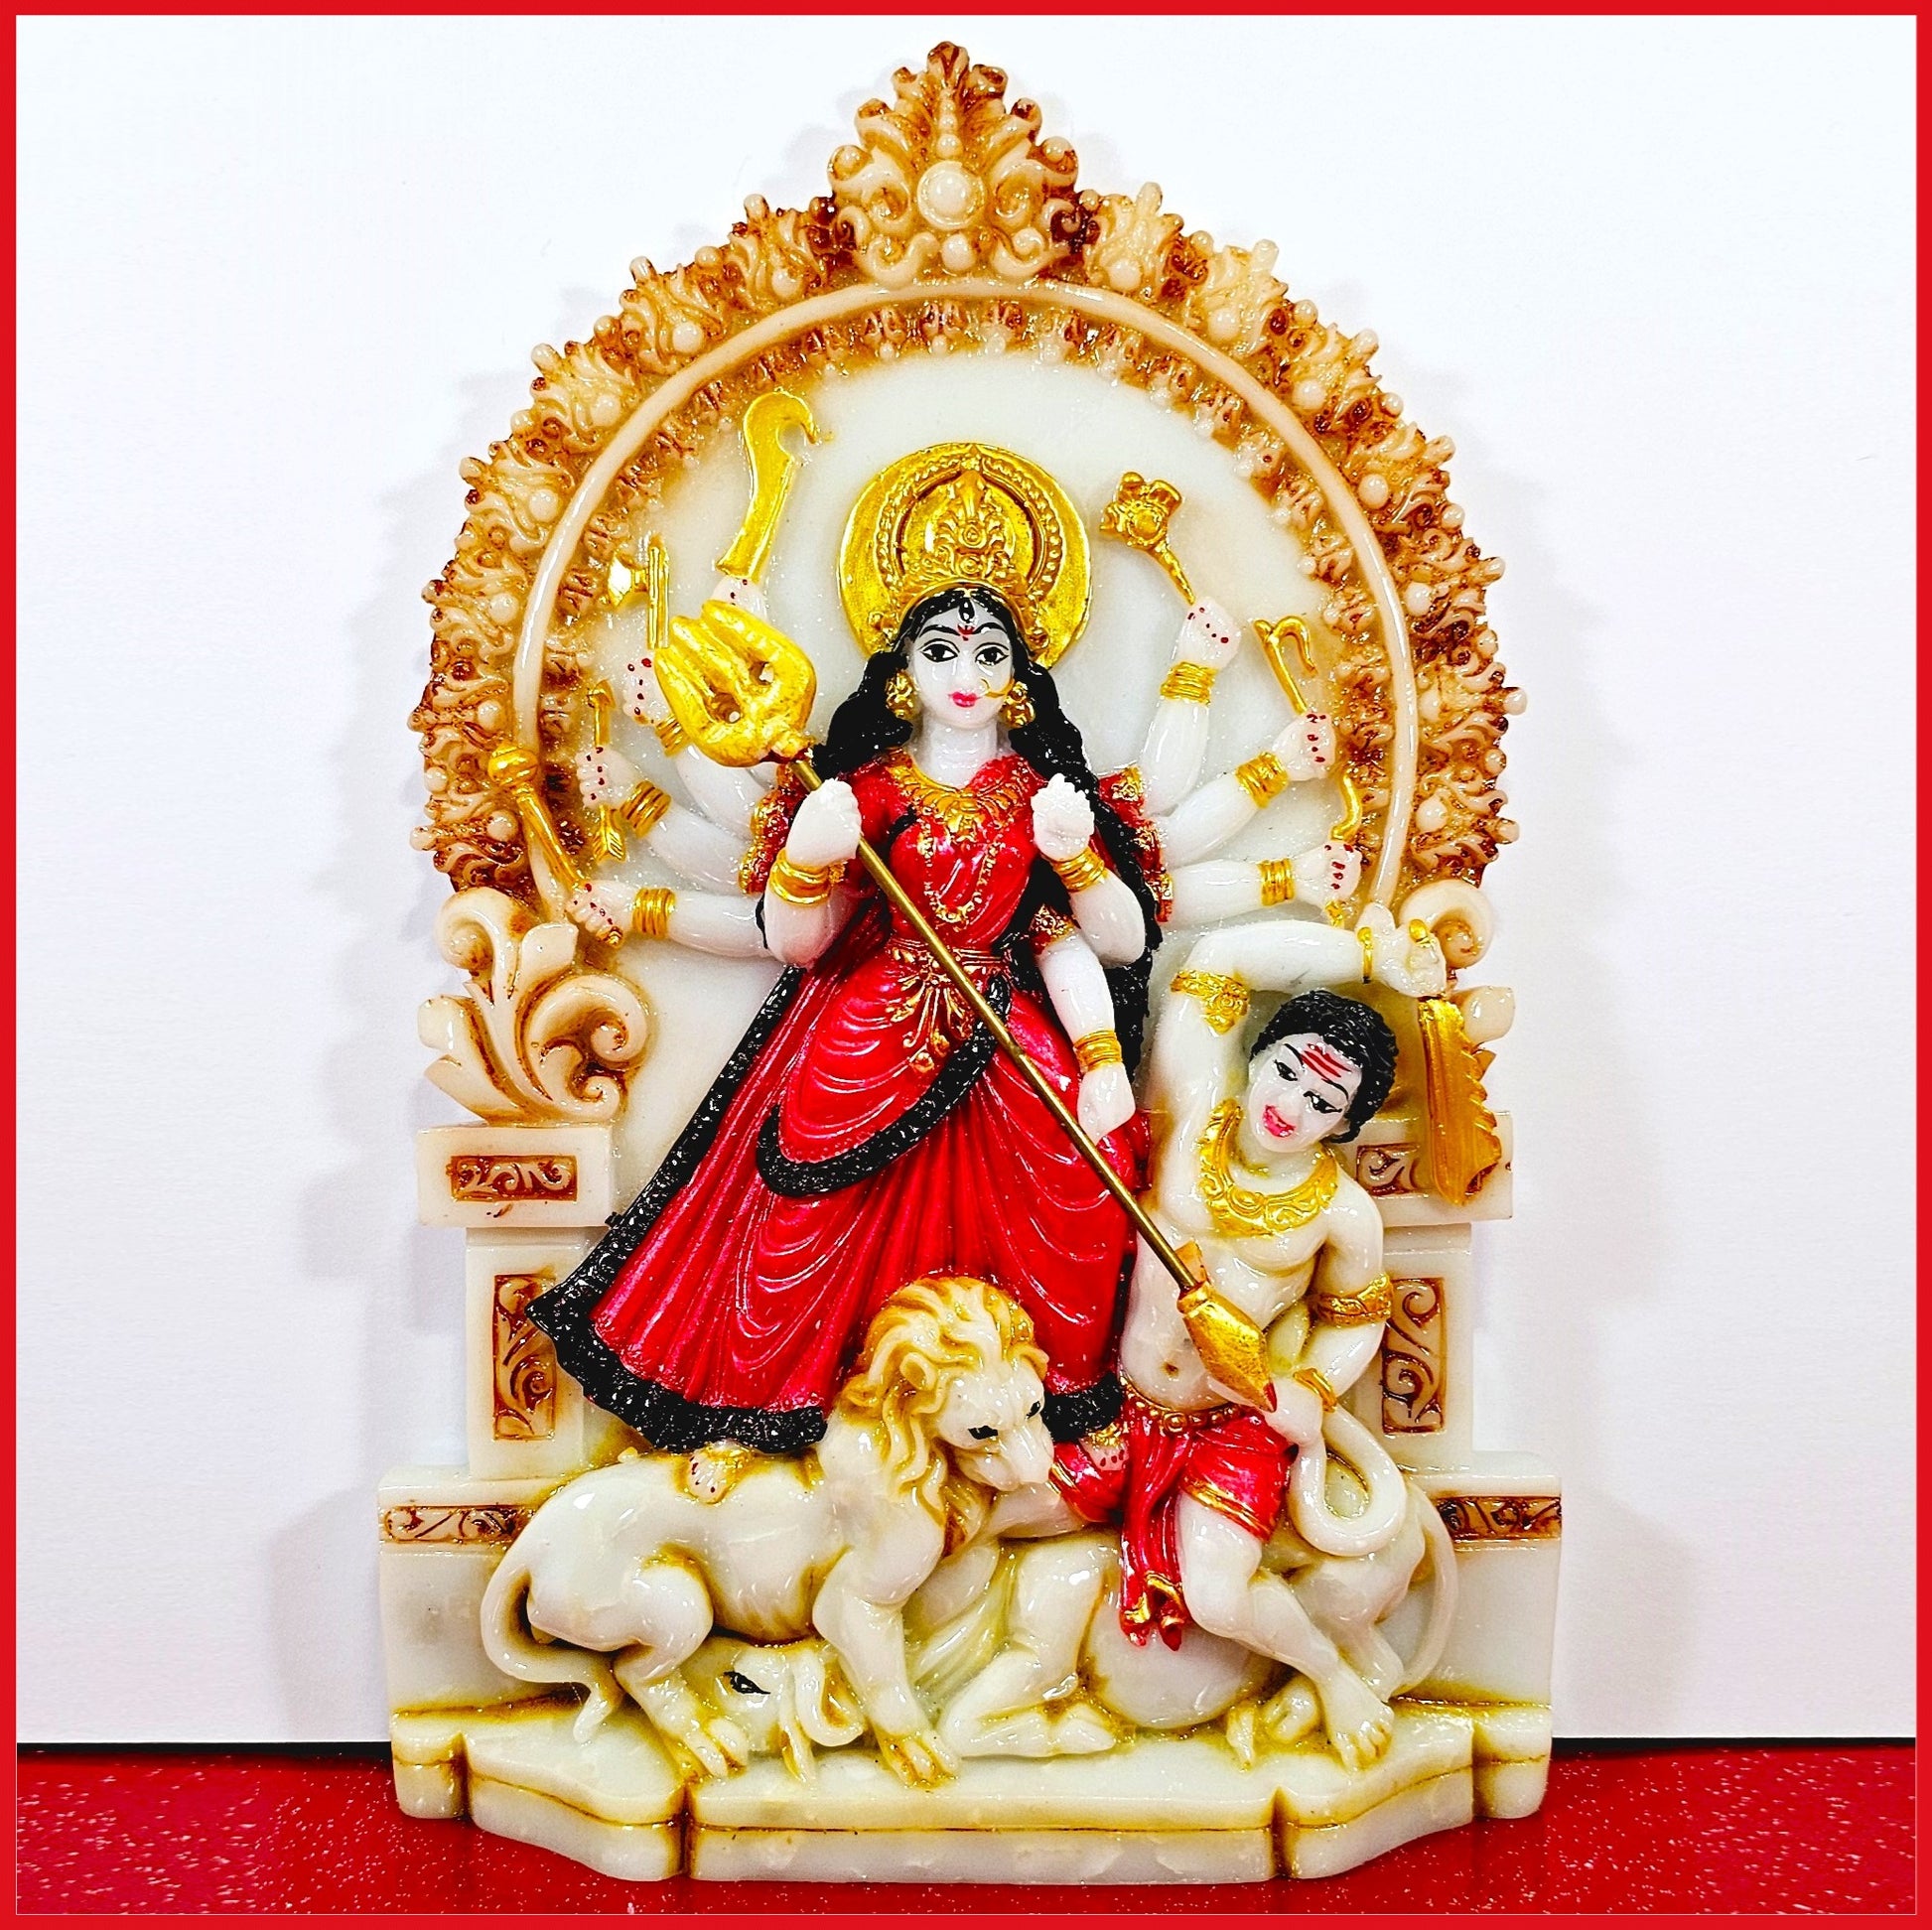 Goddess Durga Marble Statue